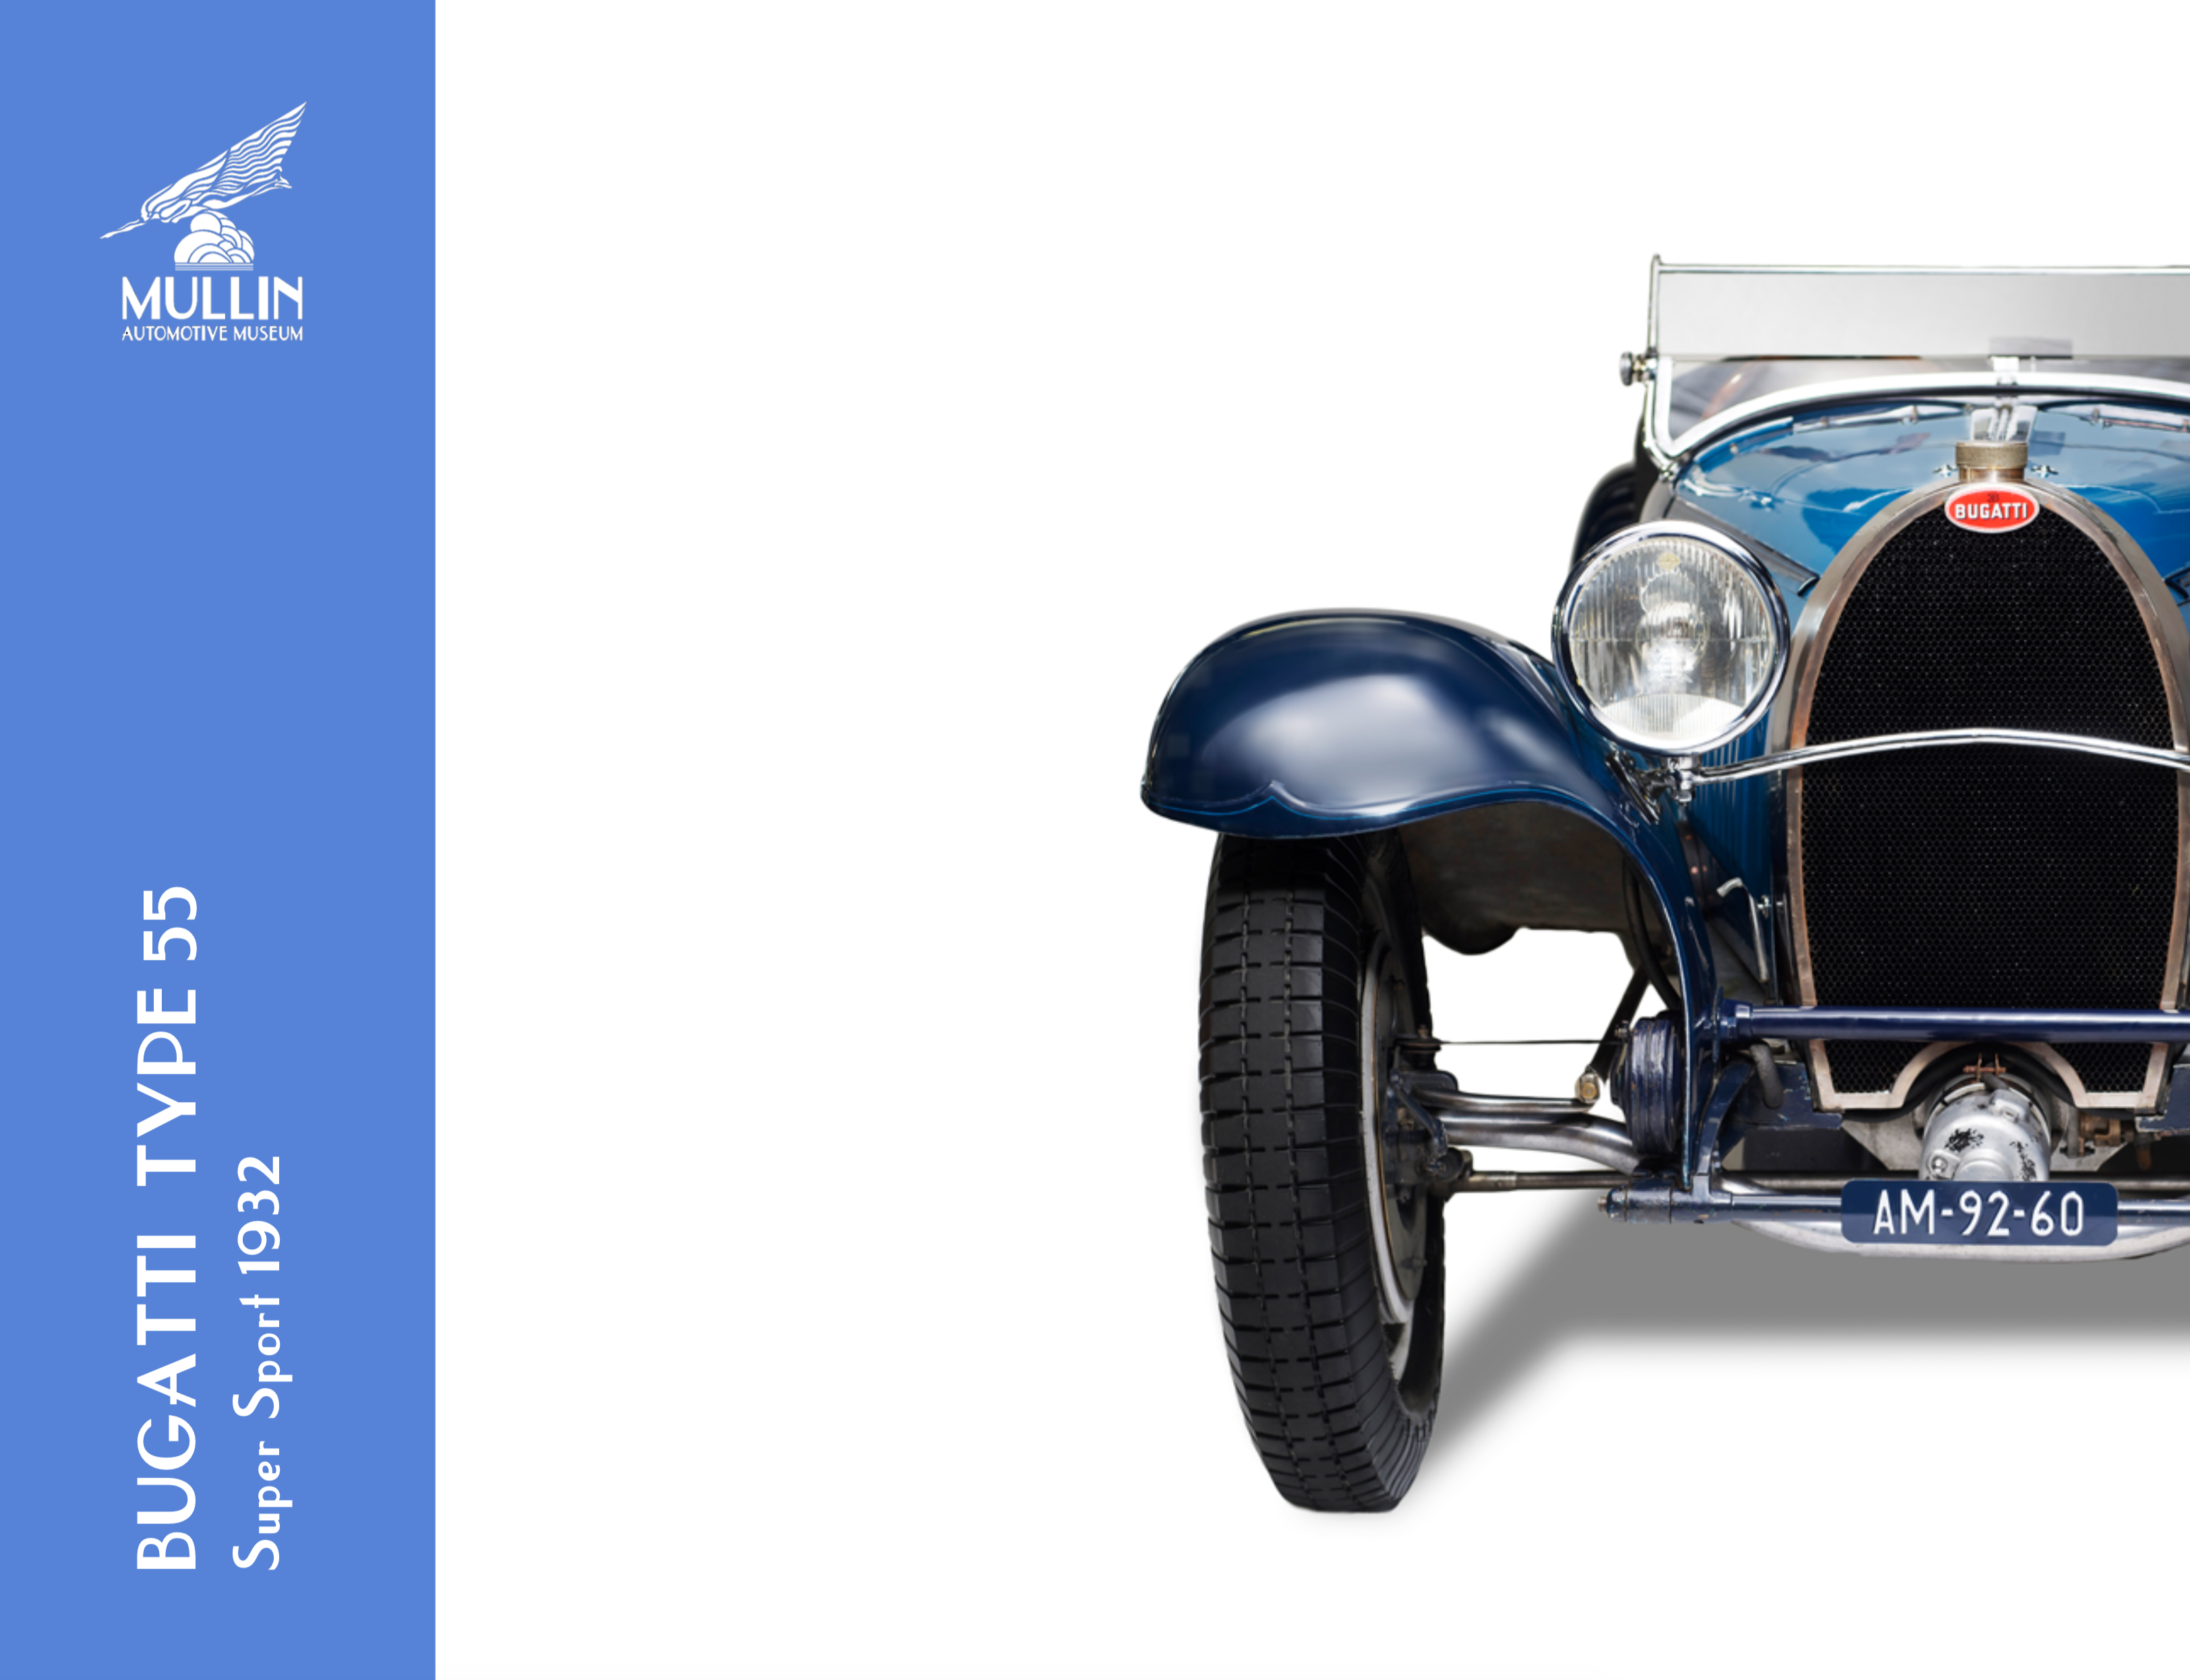 Collection – Mullin Automotive Museum